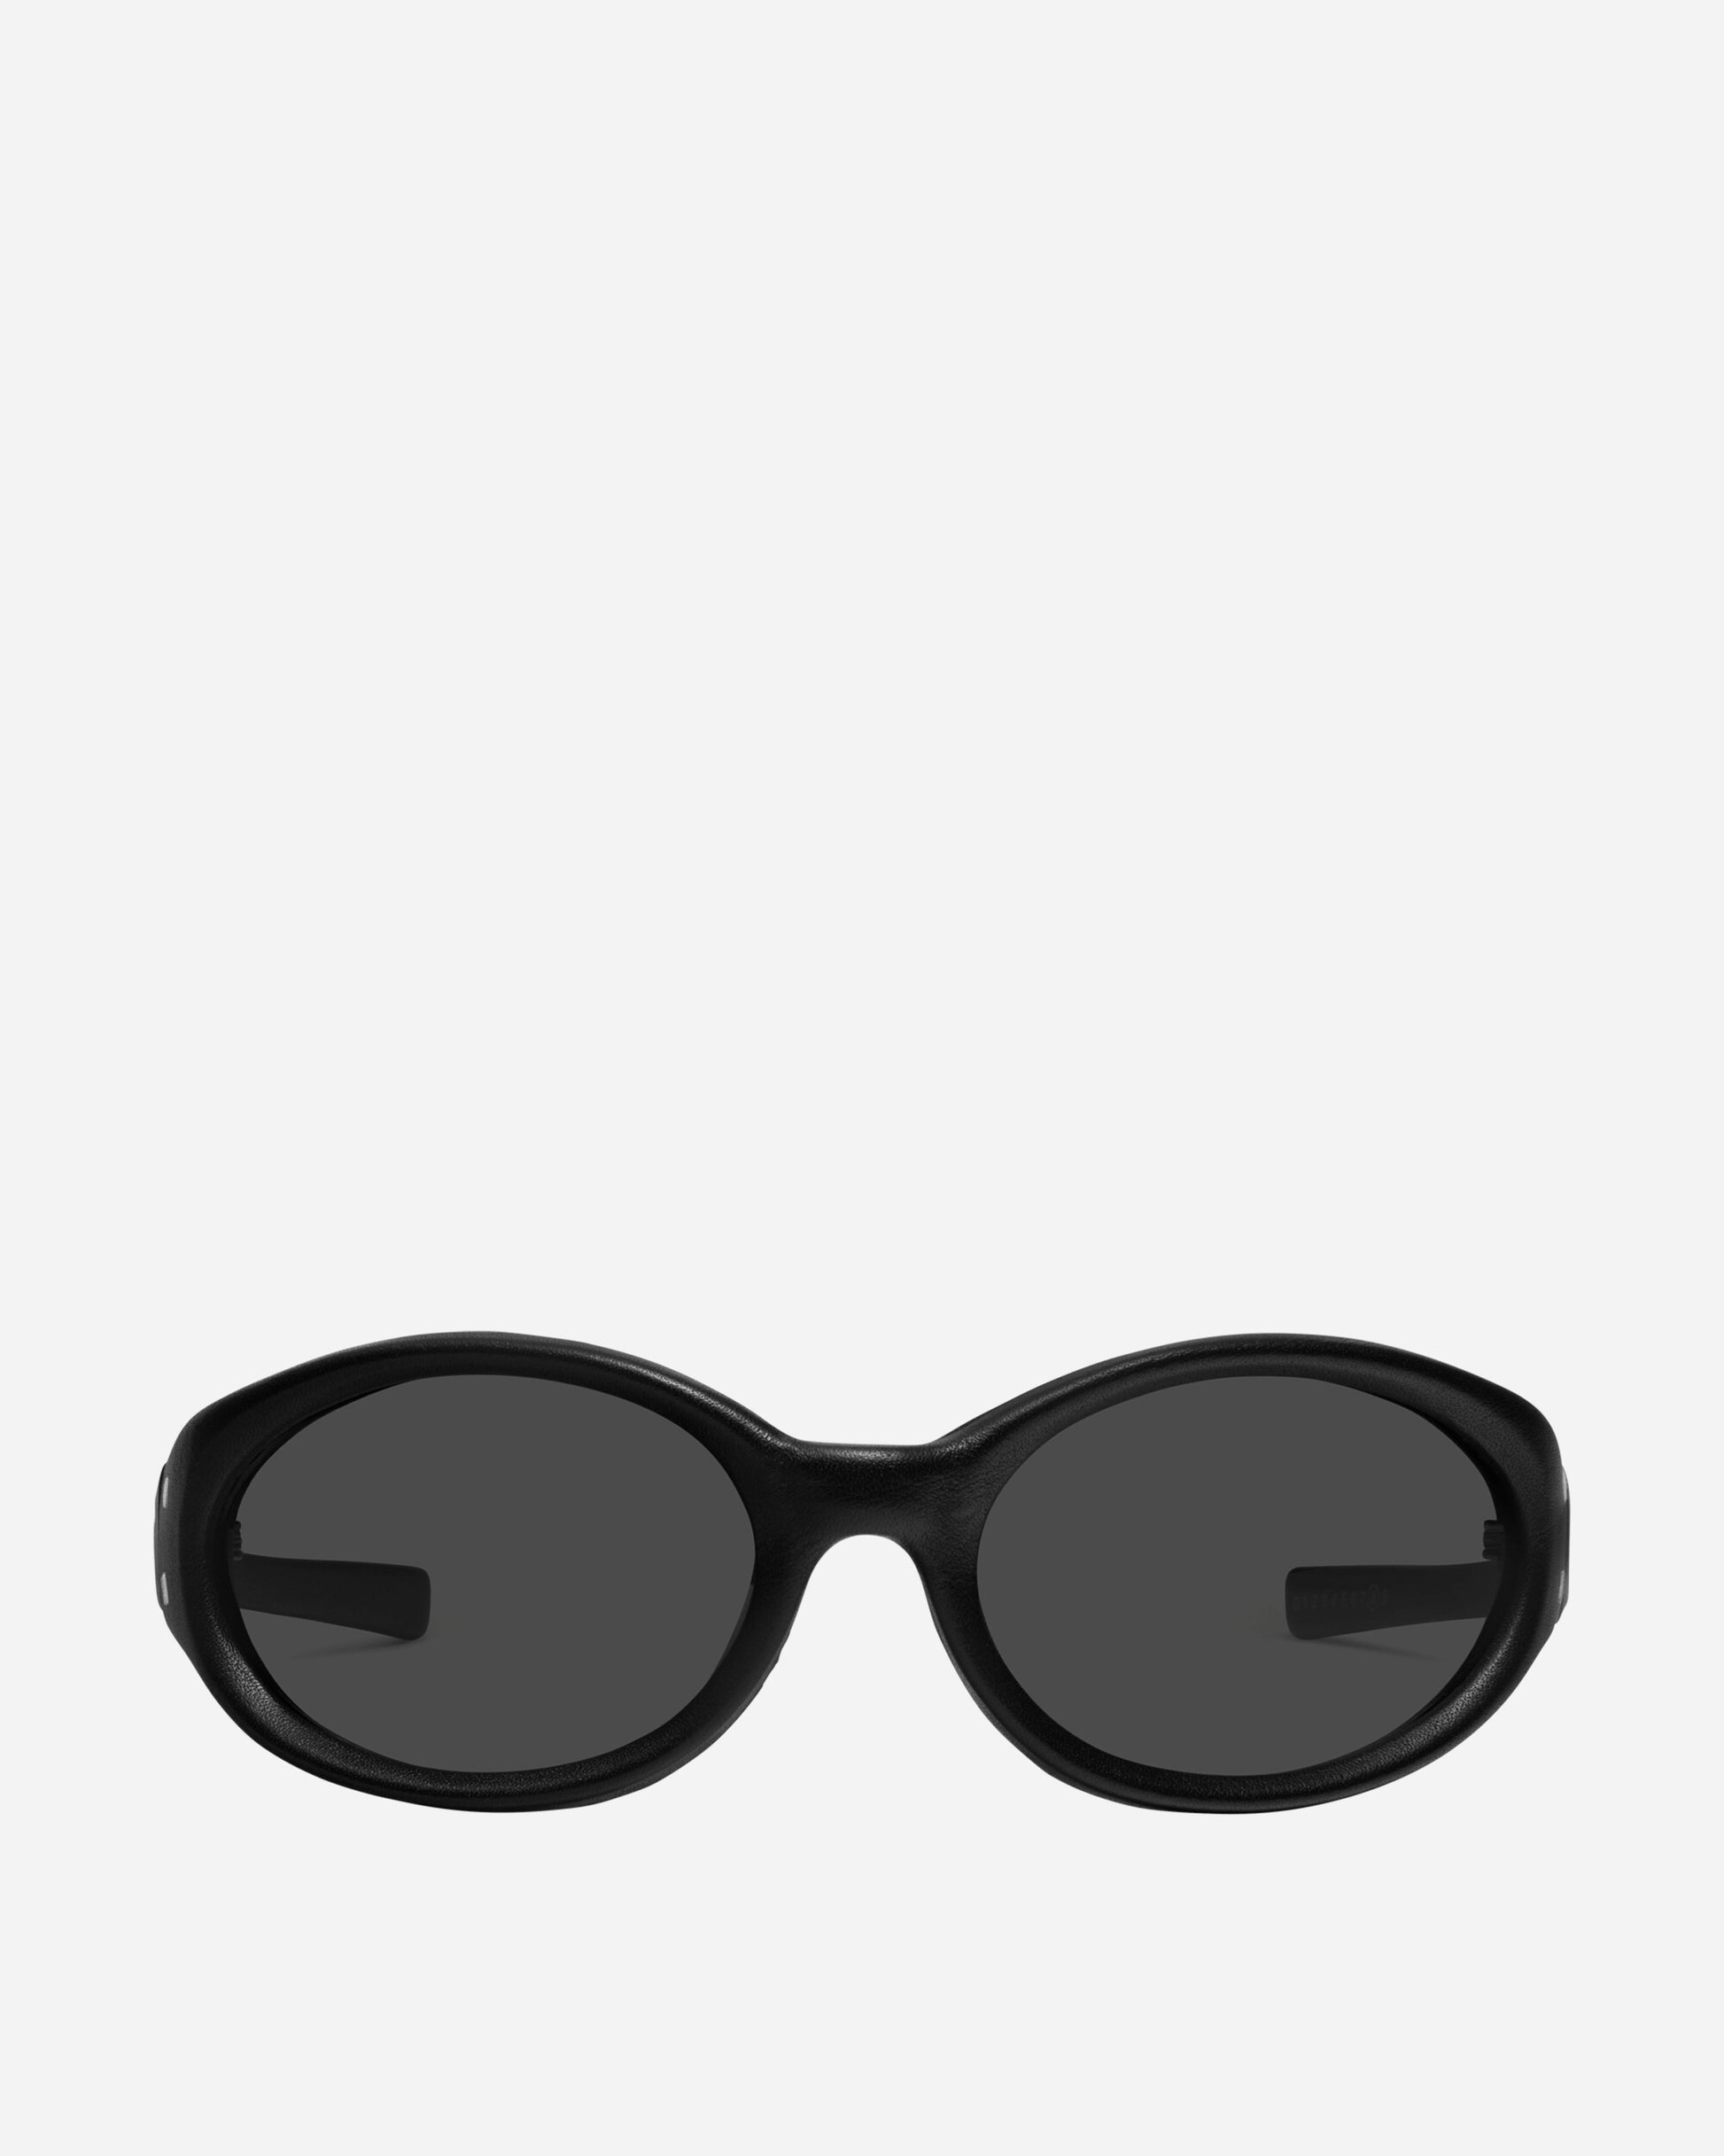 Gentle Monster Mm104 Leather Black Eyewear Sunglasses MM104 L01